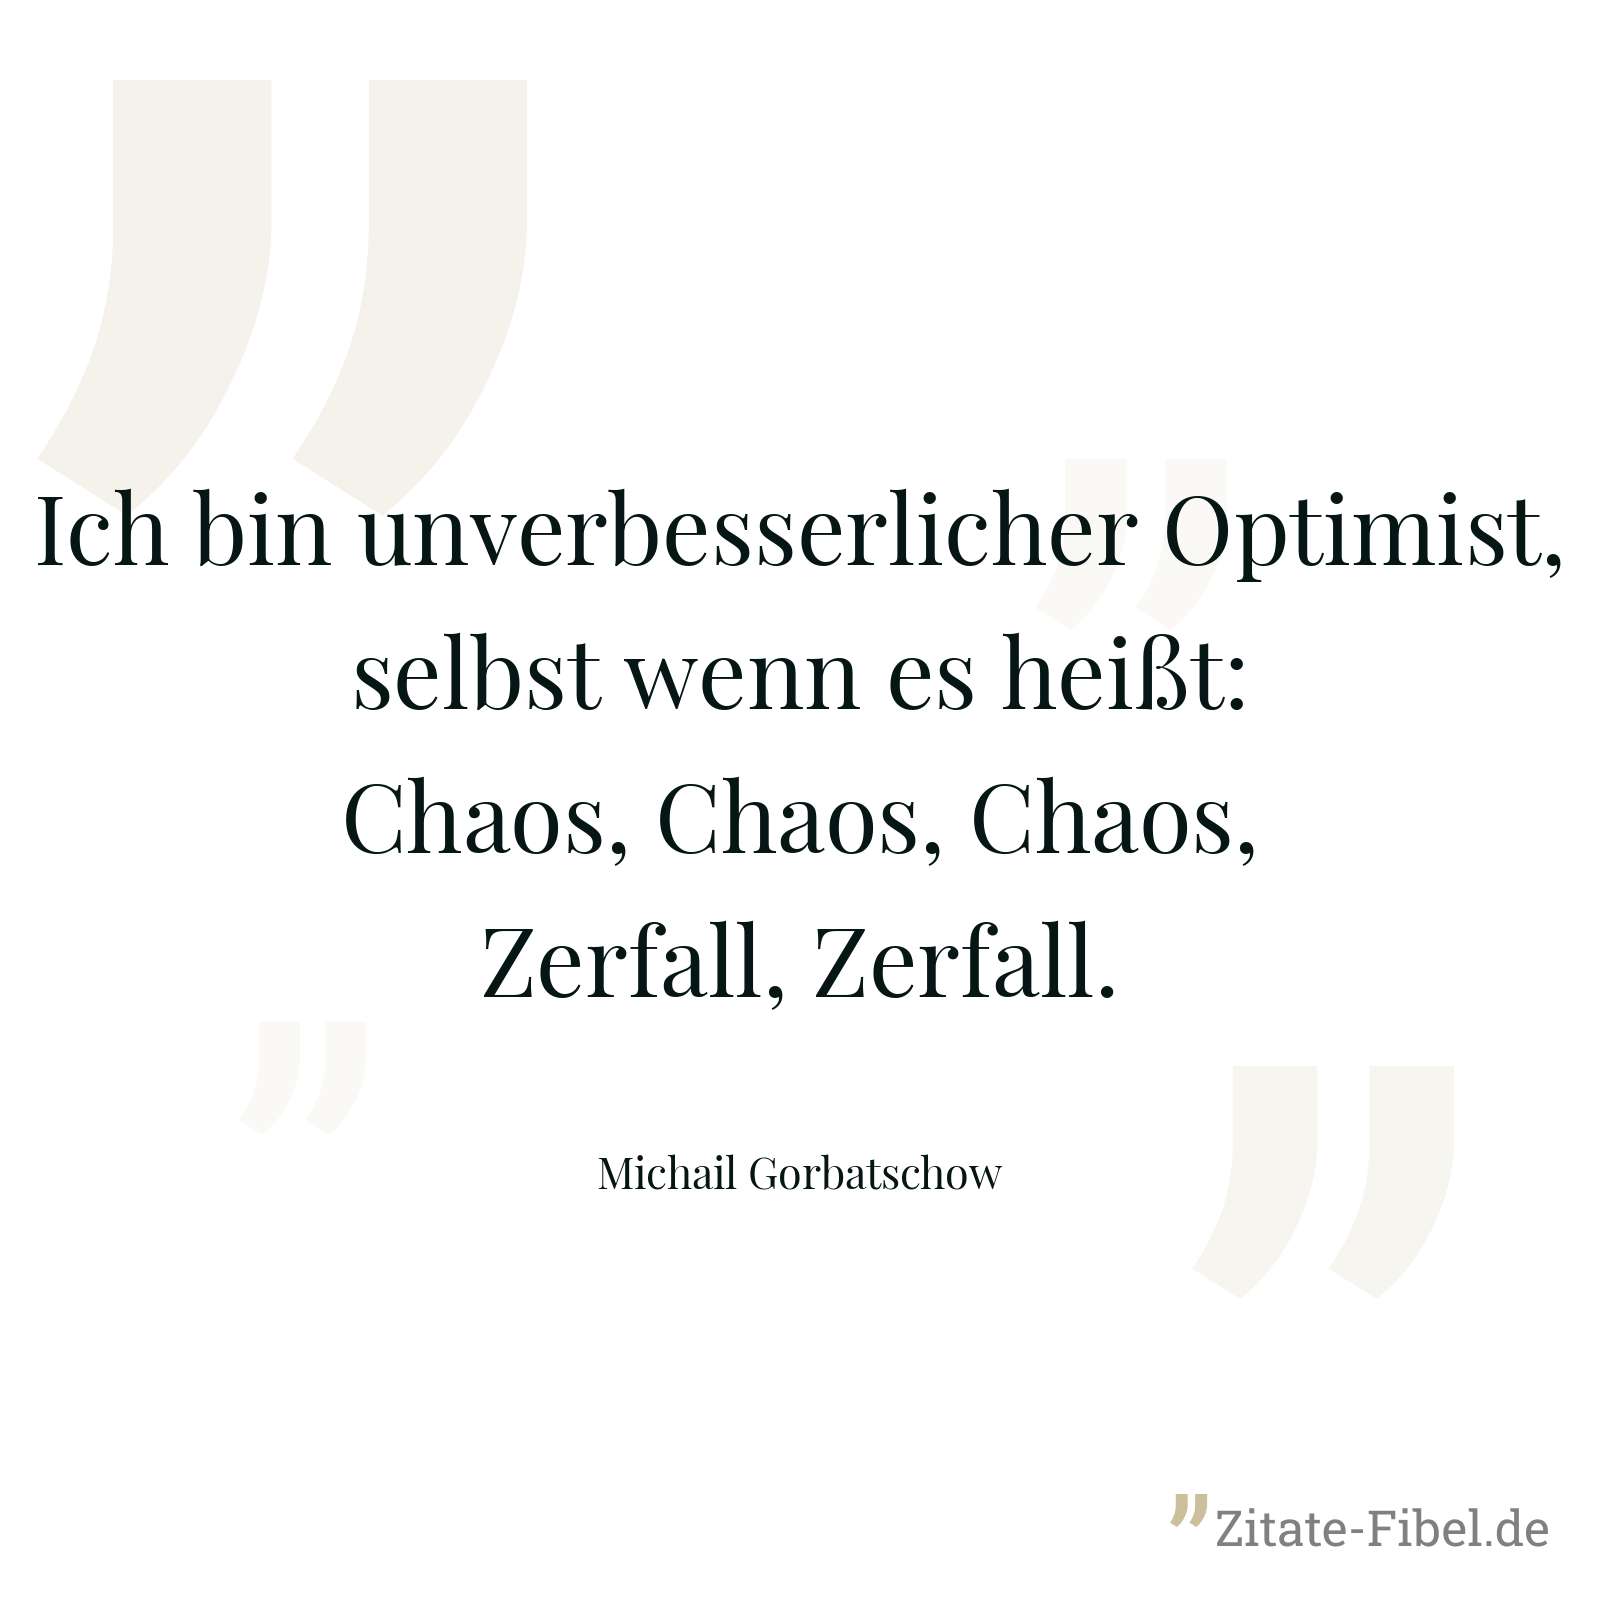 Ich bin unverbesserlicher Optimist, selbst wenn es heißt: Chaos, Chaos, Chaos, Zerfall, Zerfall. - Michail Gorbatschow